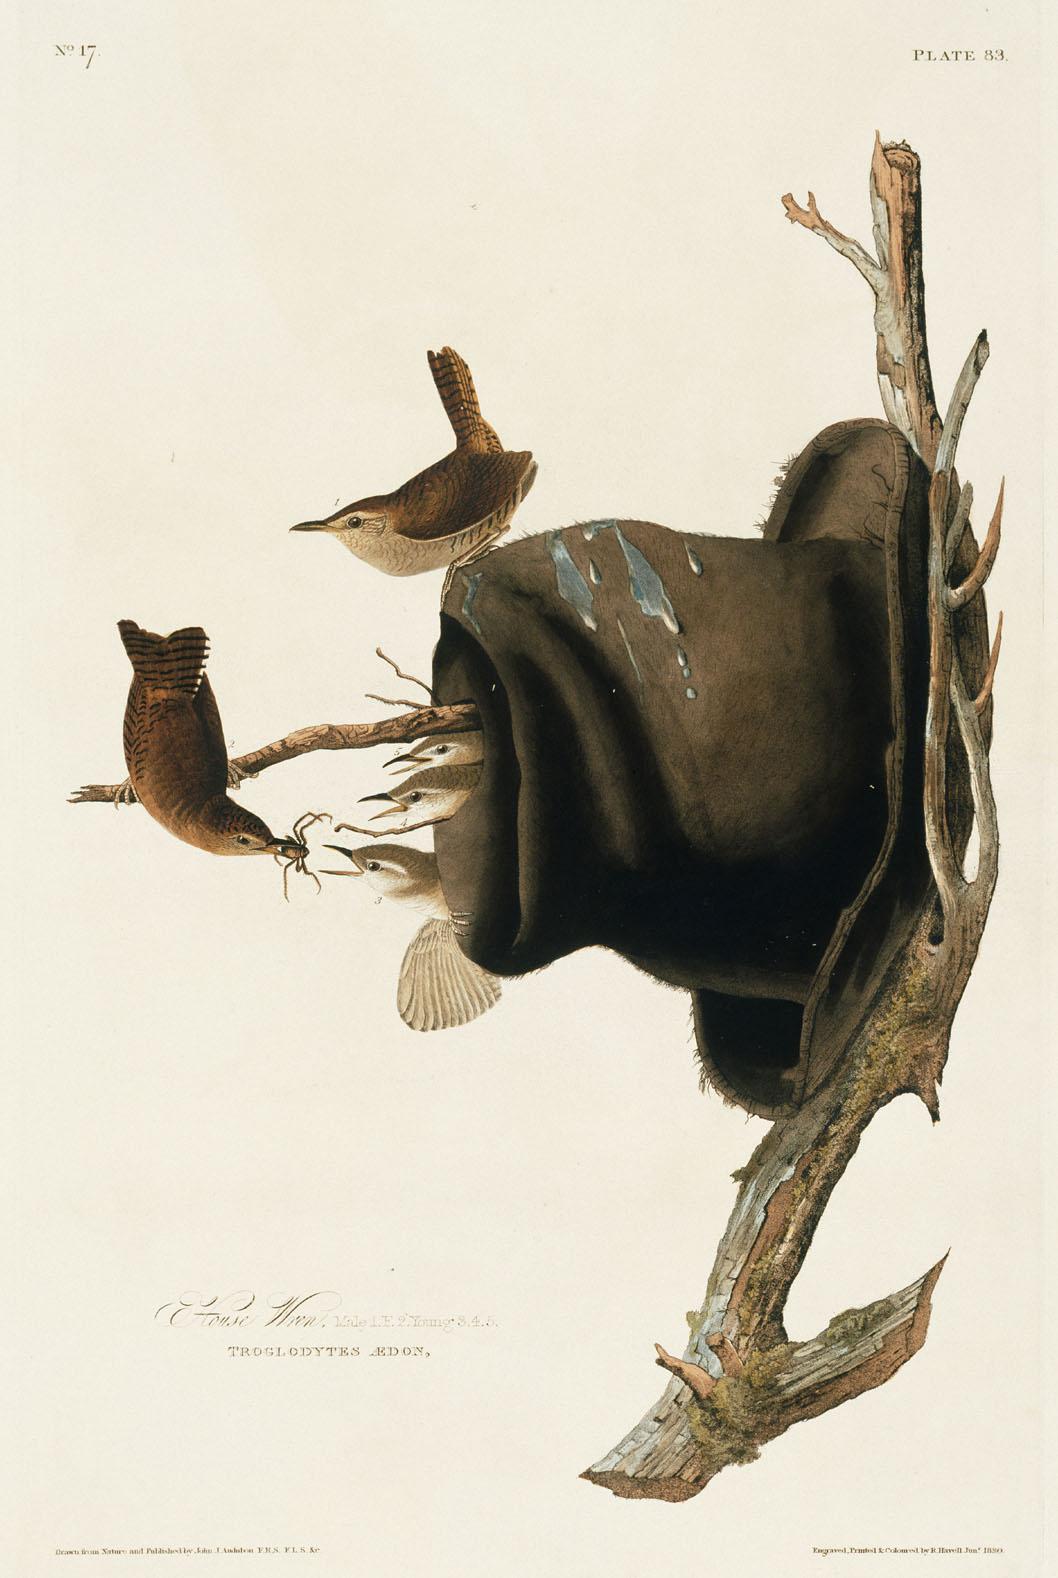 Illustration of several birds nesting in a dress hat.